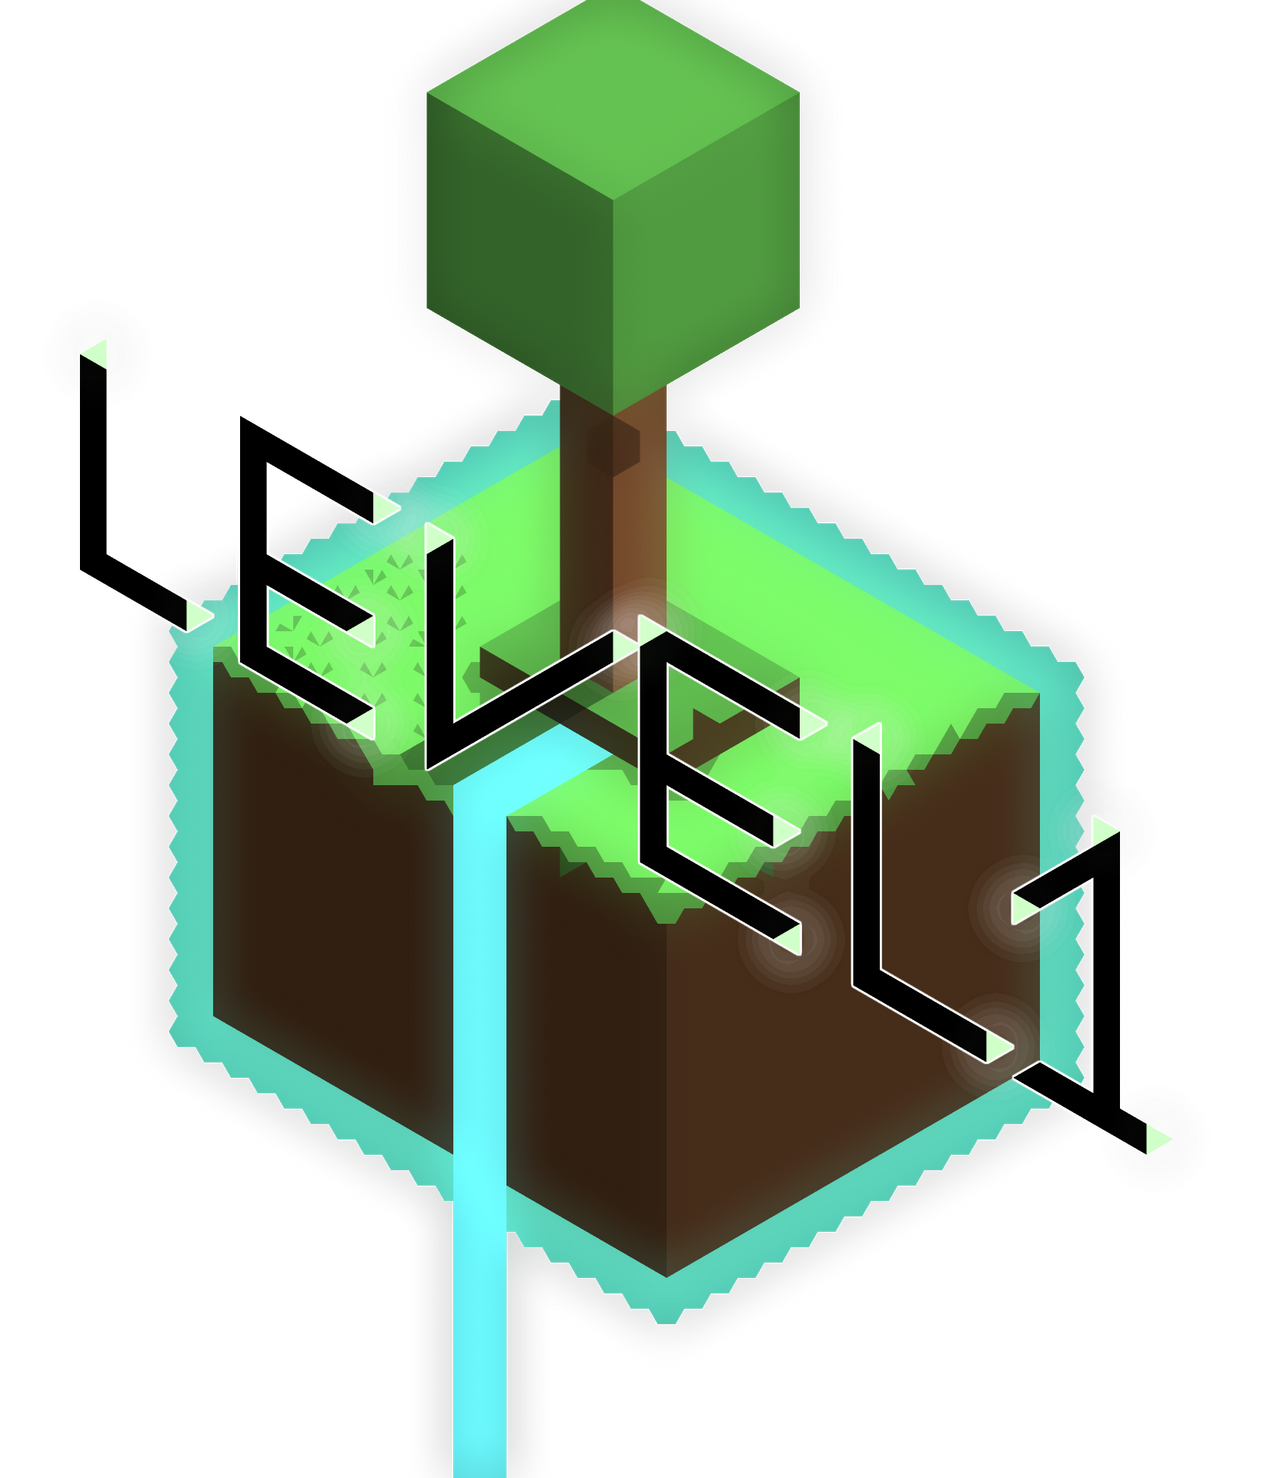 level_1_by_hexisur-da72s8x.png